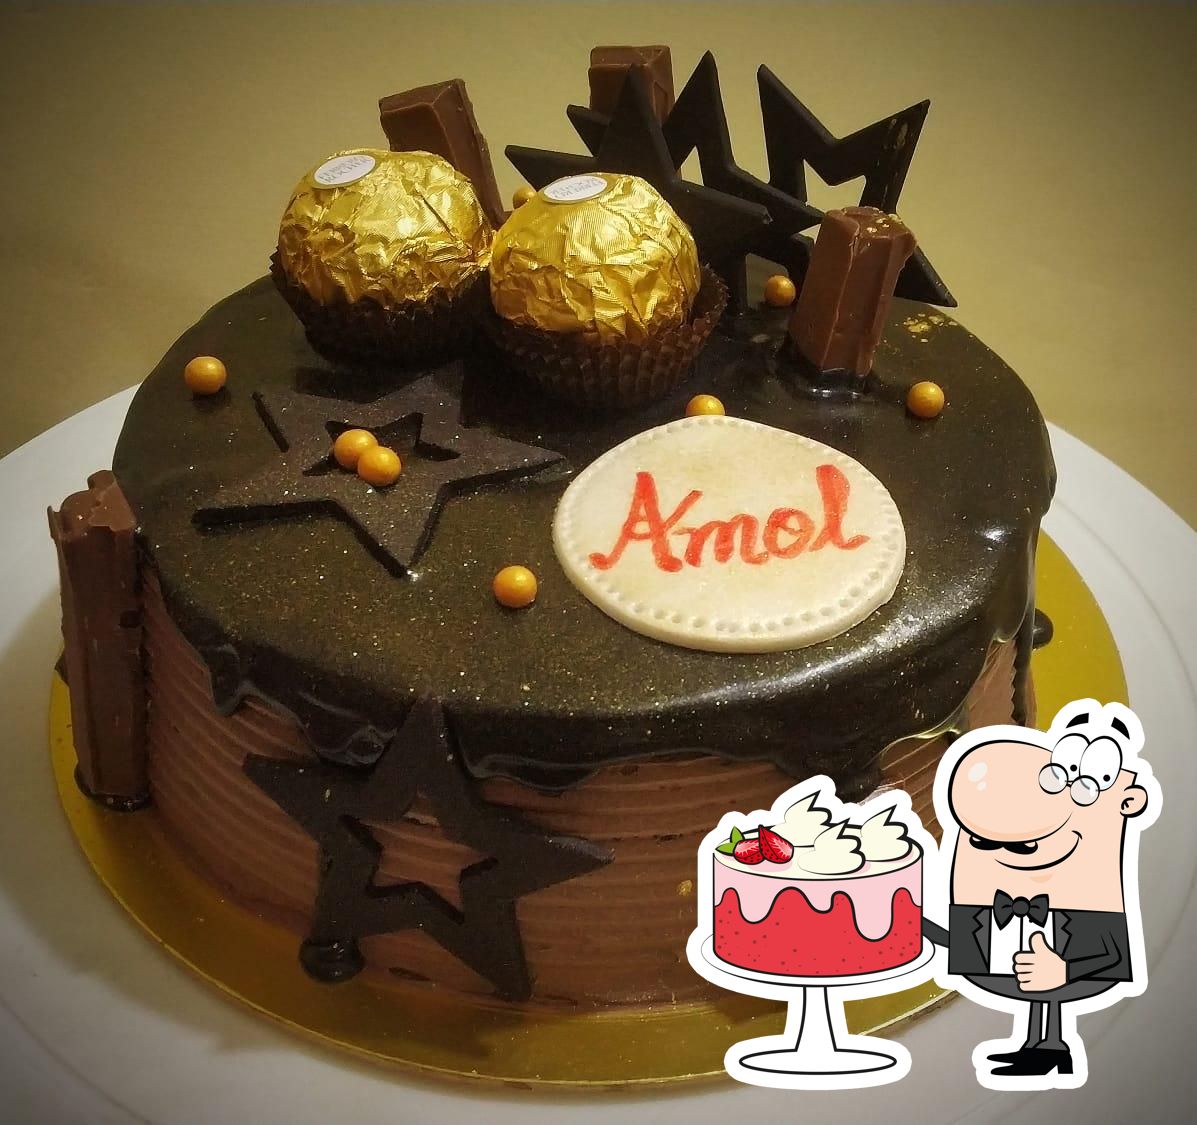 My Childhood friend Amol Birthday Celebrate Today